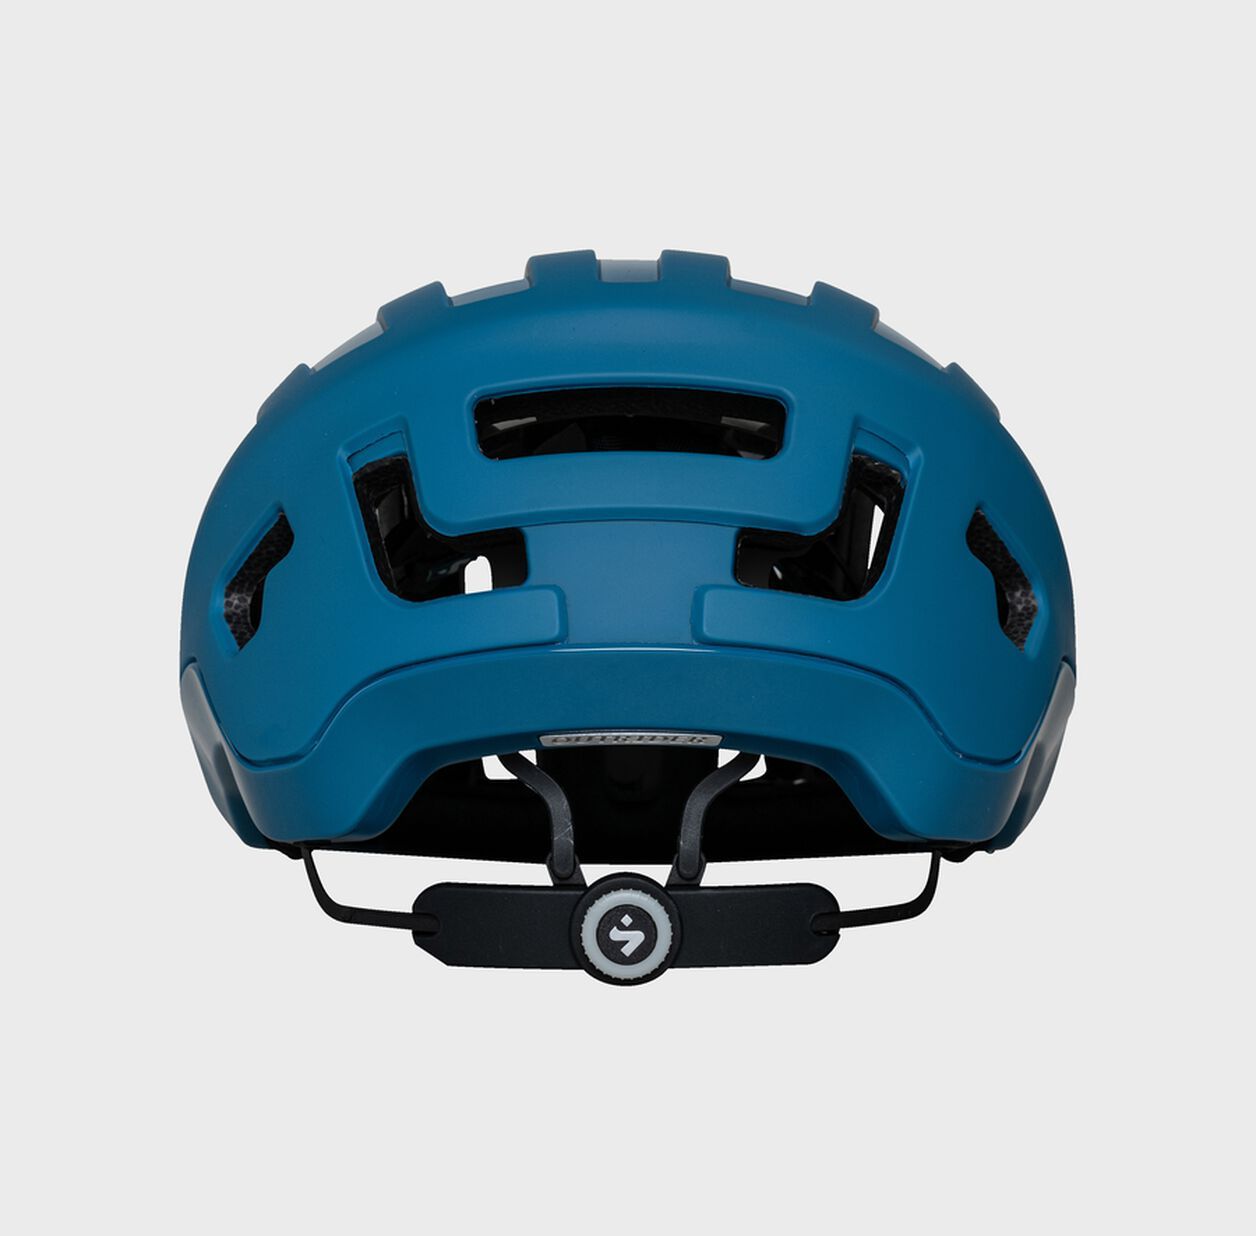 Helmet Outrider Aquamarine mat Helmets Sweet Protection 